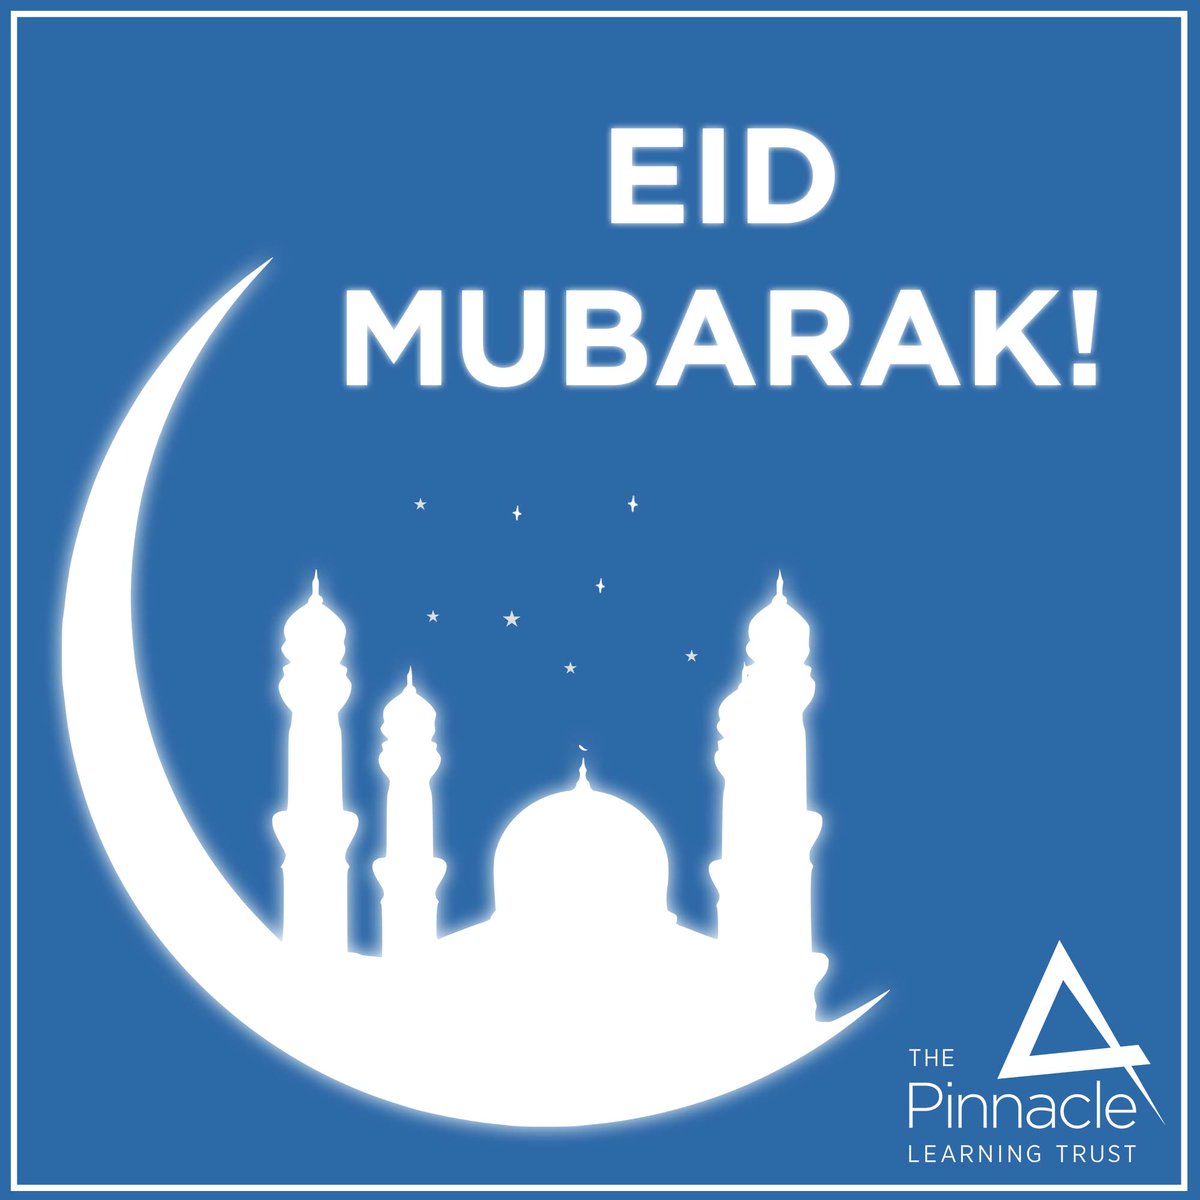 Eid Mubarak to all staff and students celebrating across our trust! #EidMubarak